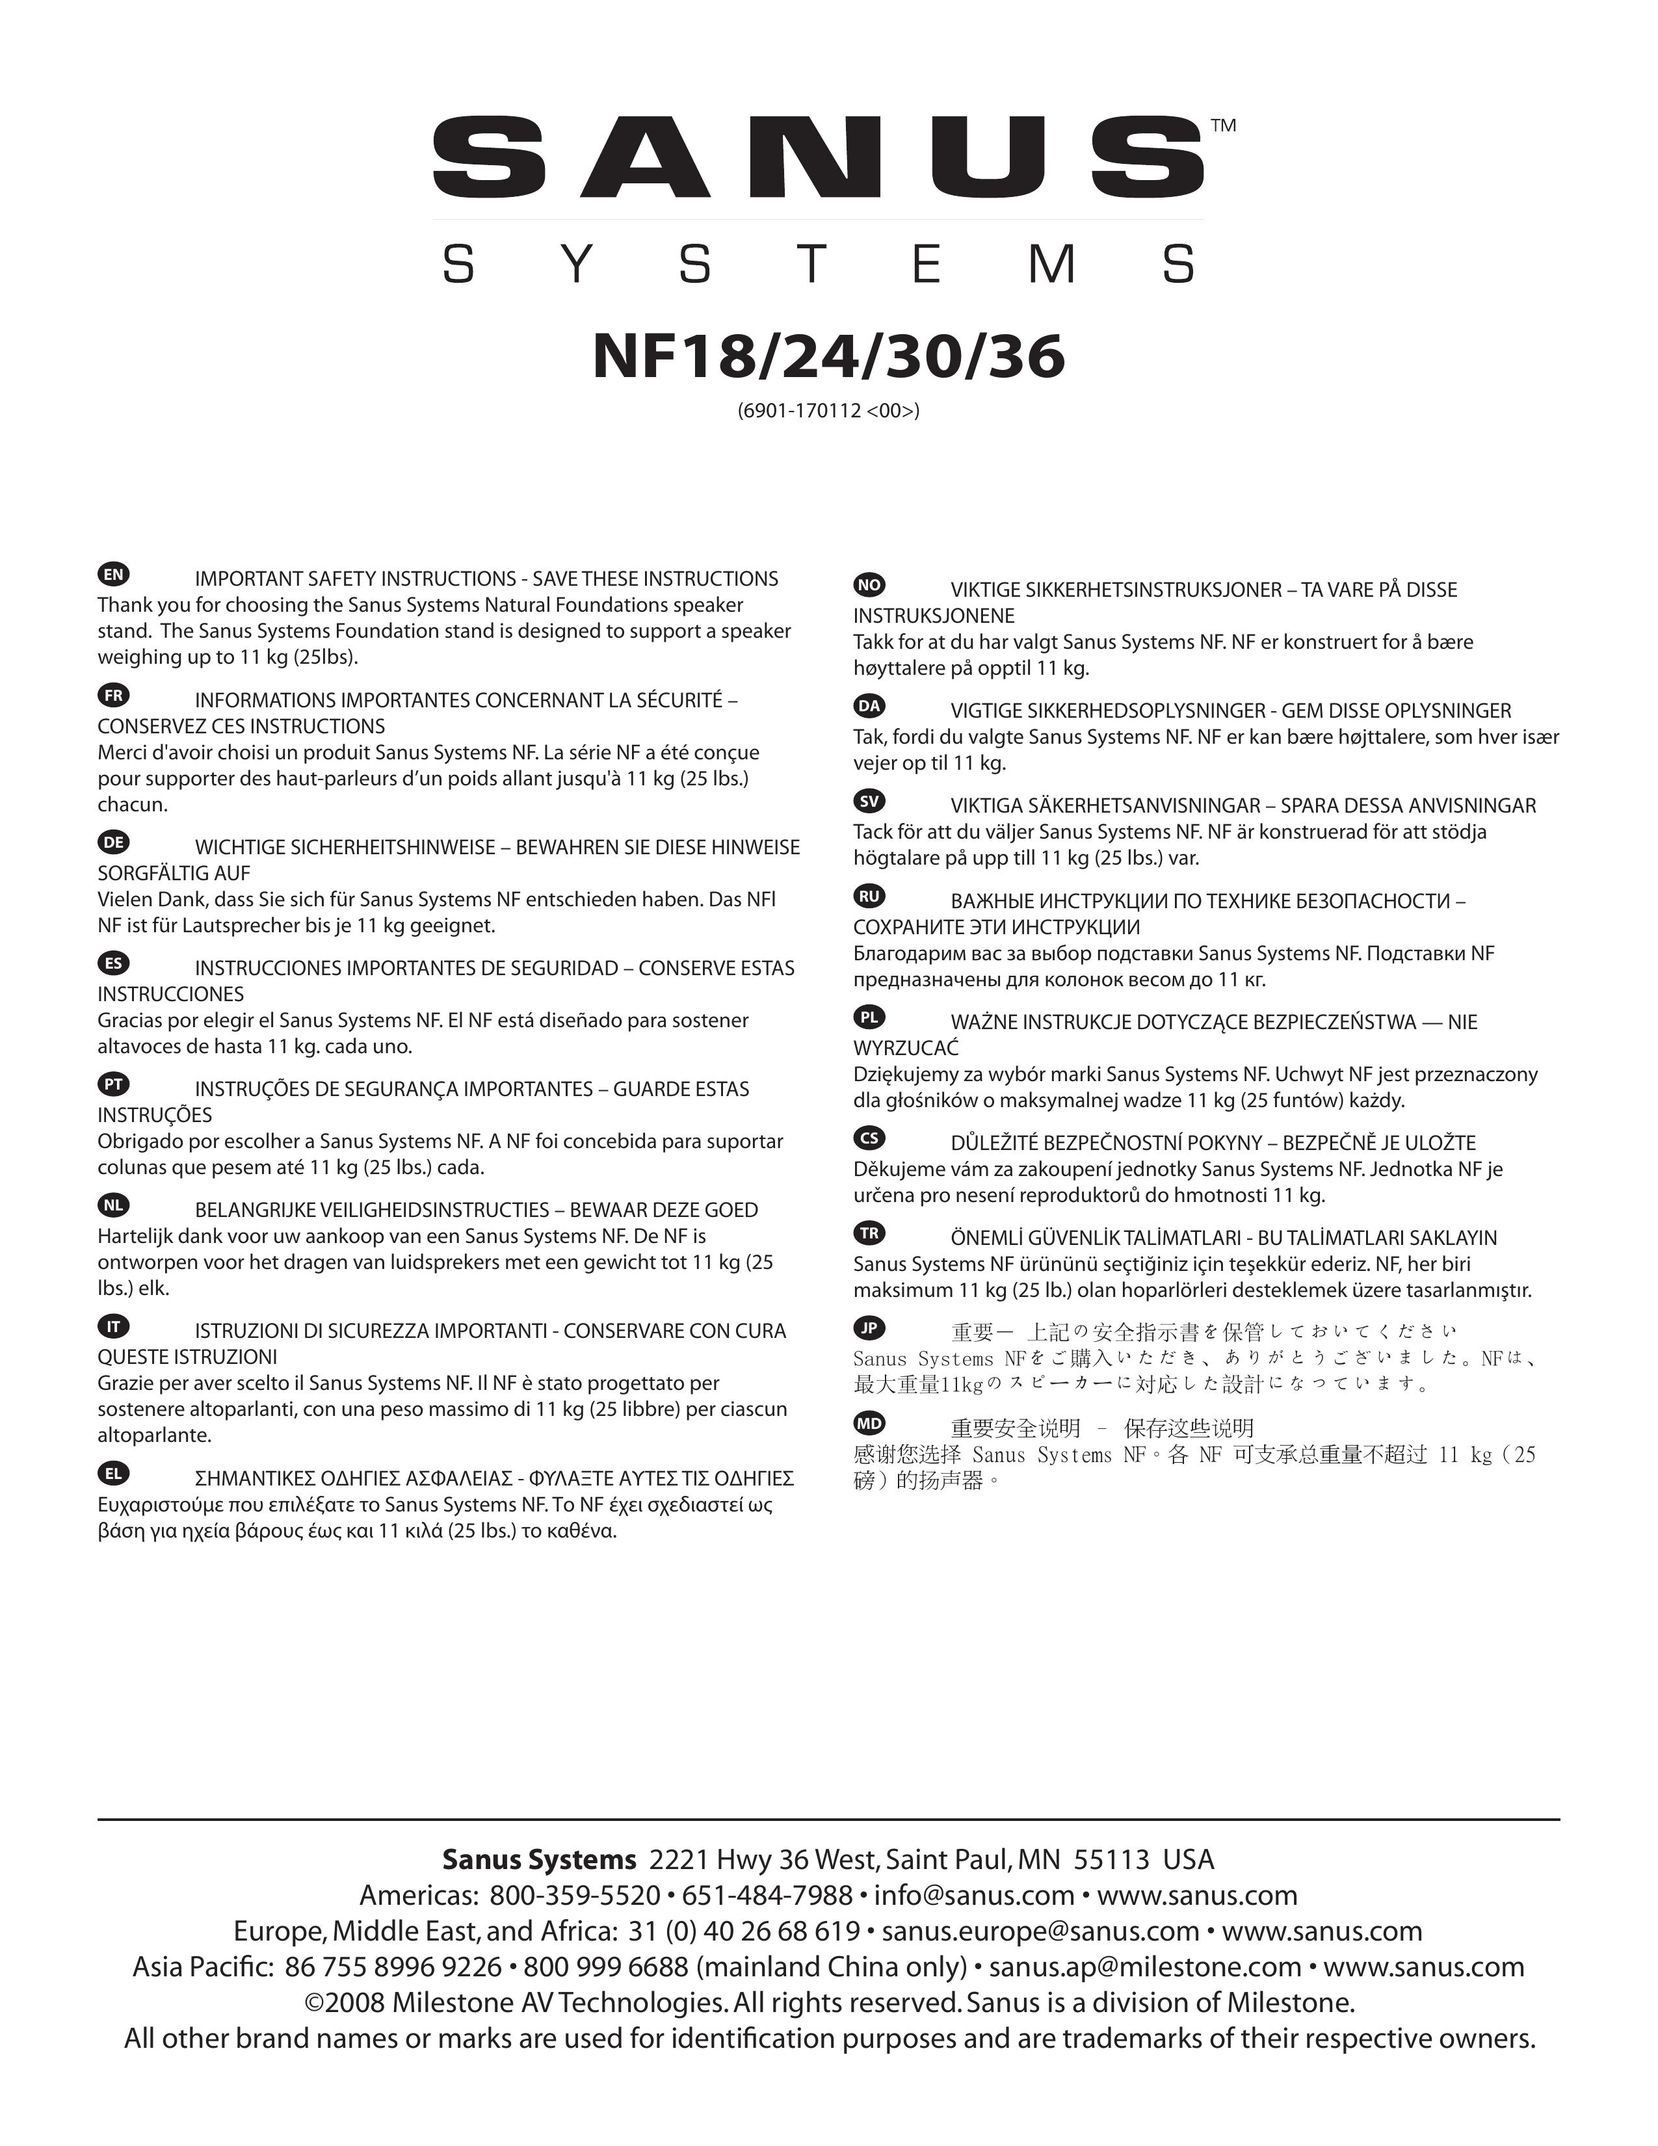 Sanus Systems NF30 Indoor Furnishings User Manual